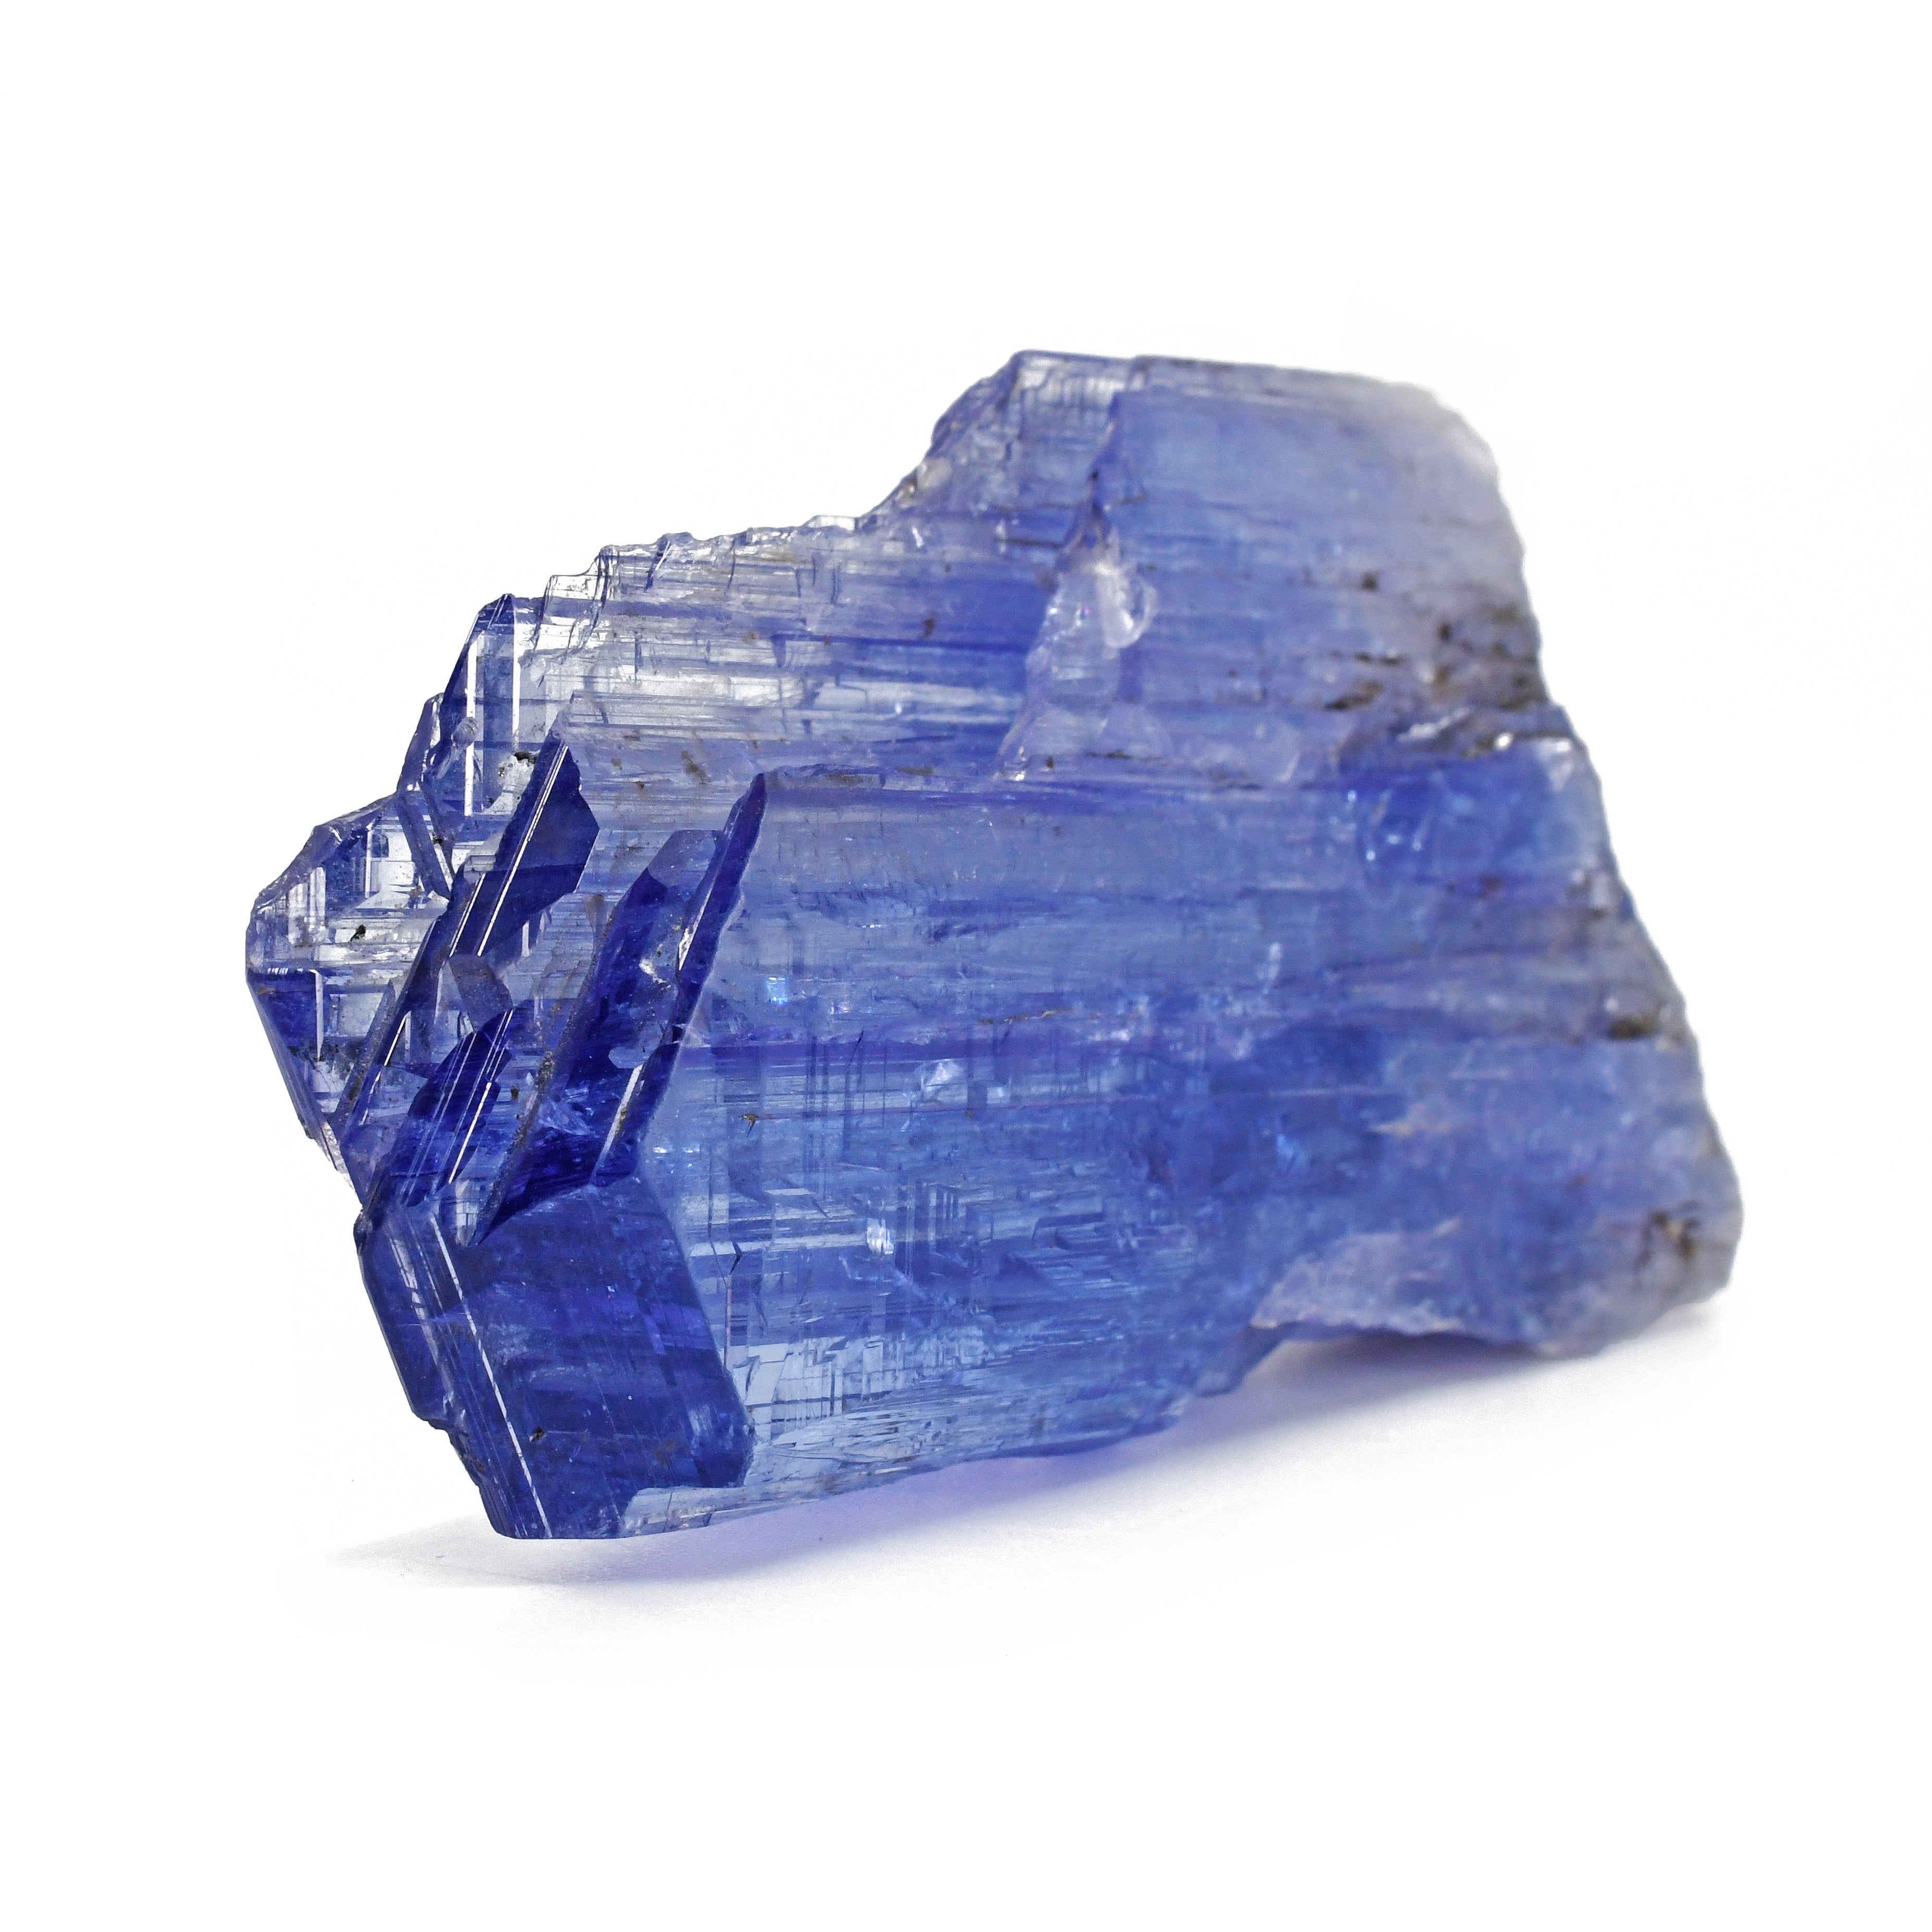 Tanzanite Natural Gem Crystal Specimen-Tanzania - VX-499 - Crystalarium